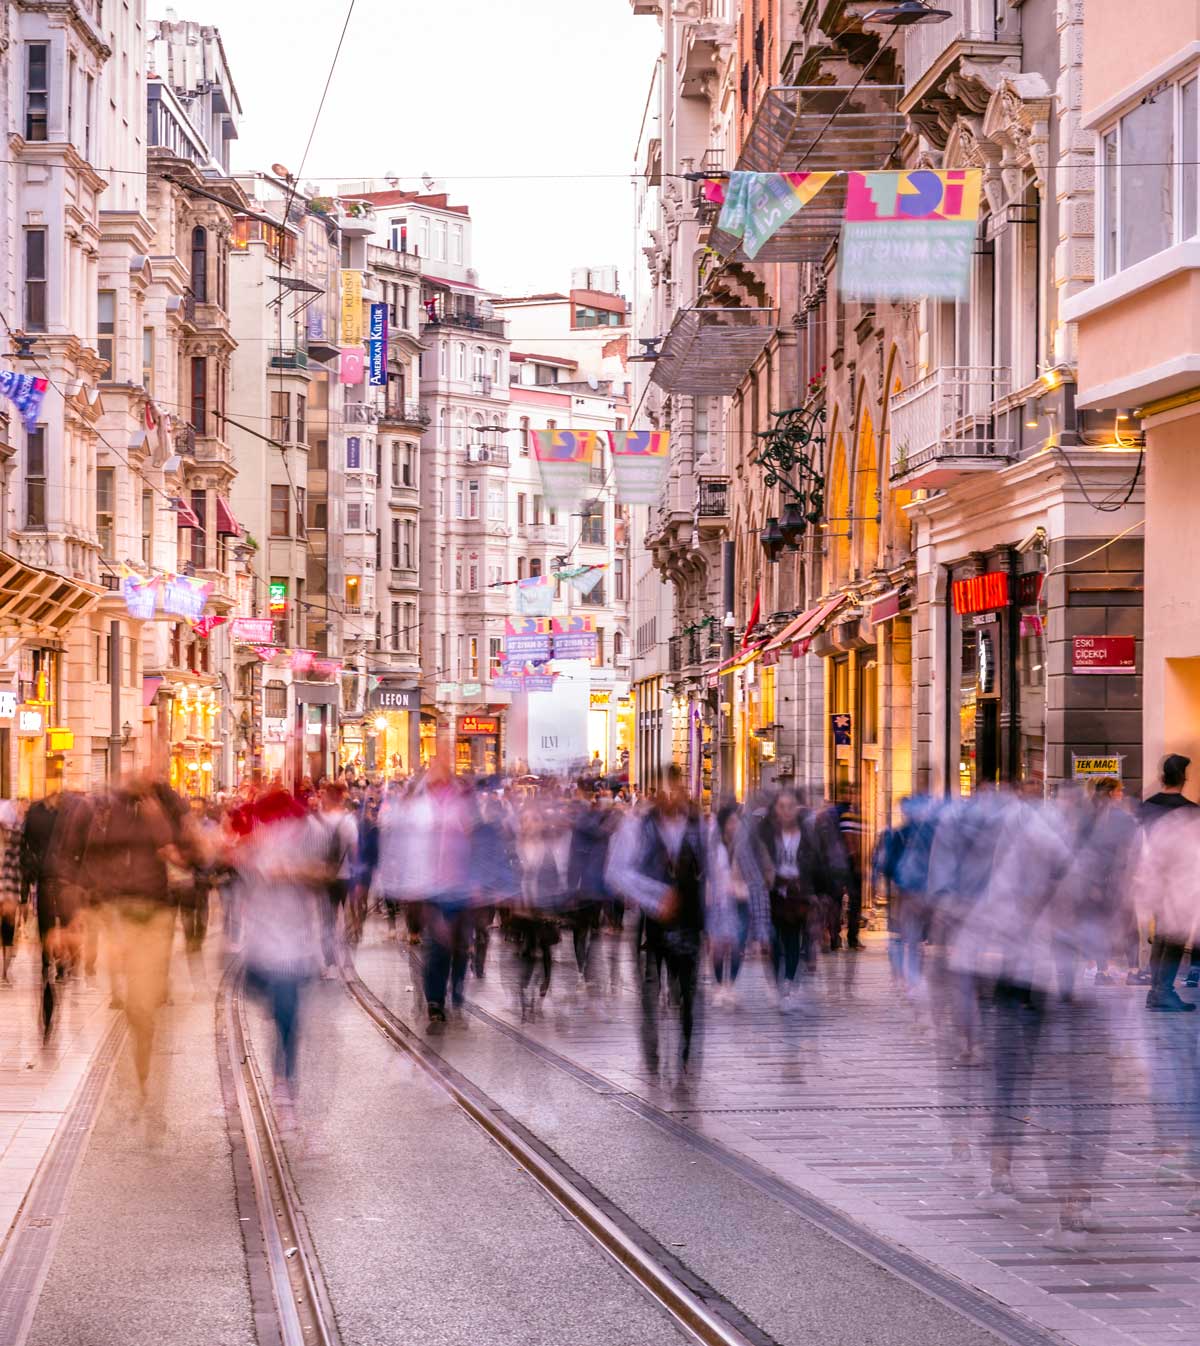 The busy İstiklal Caddesi